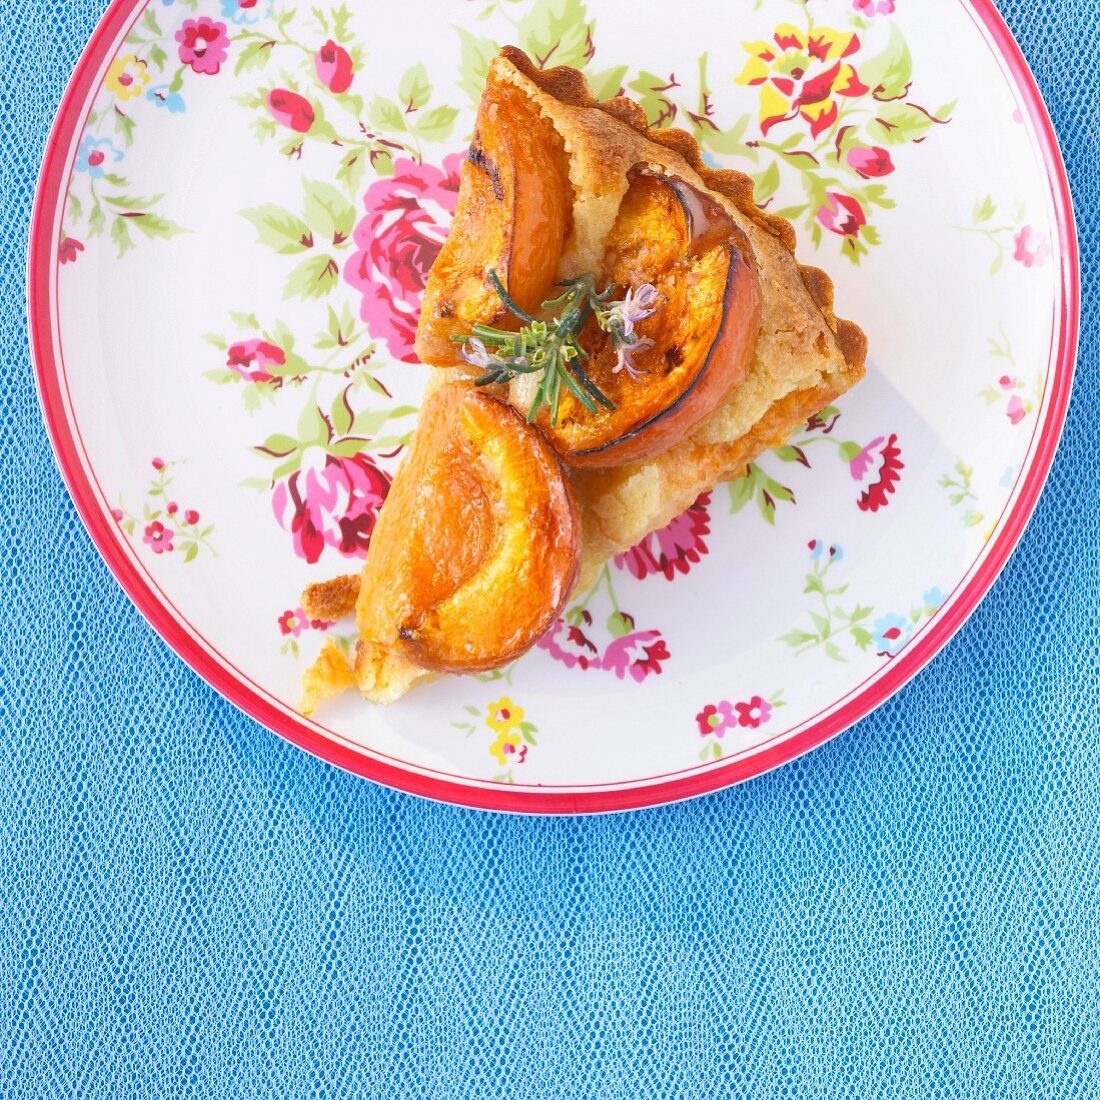 Apricot tart with almond cream